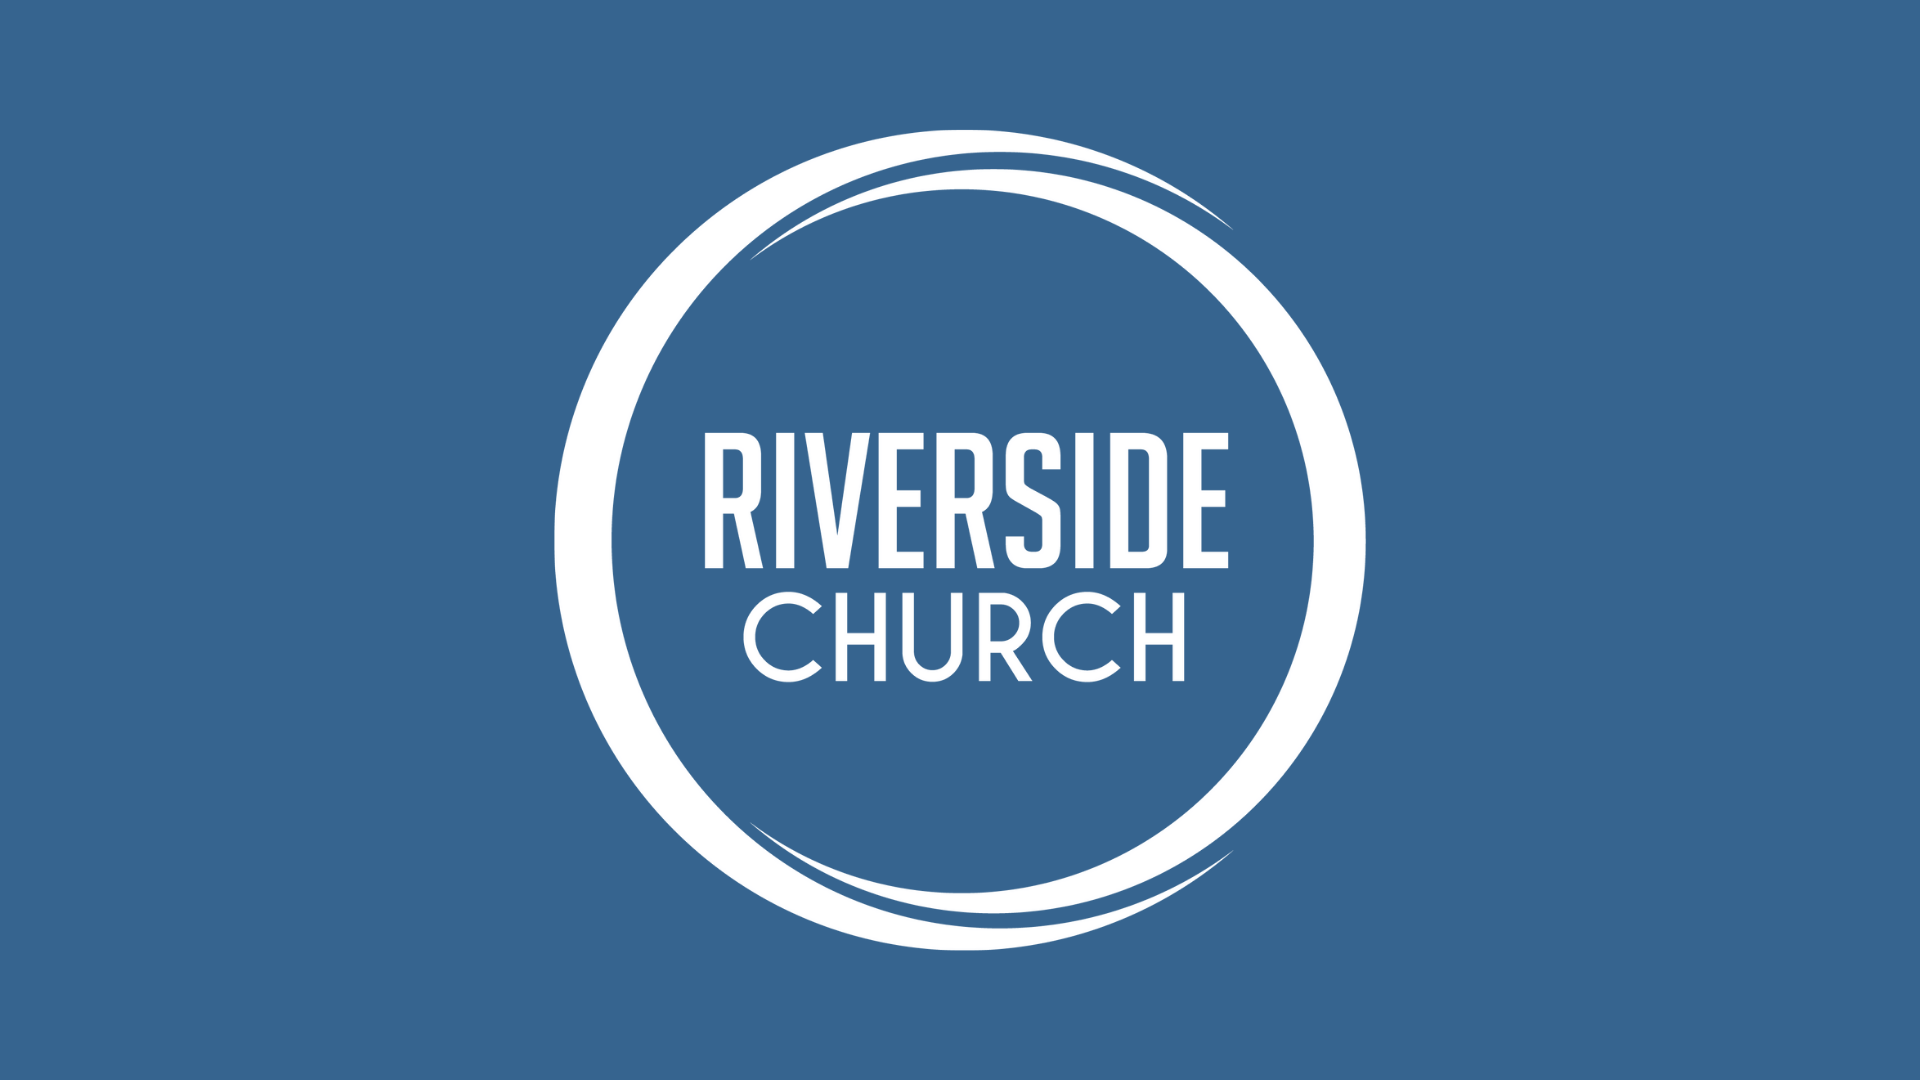 Riverside Church Wallpaper image